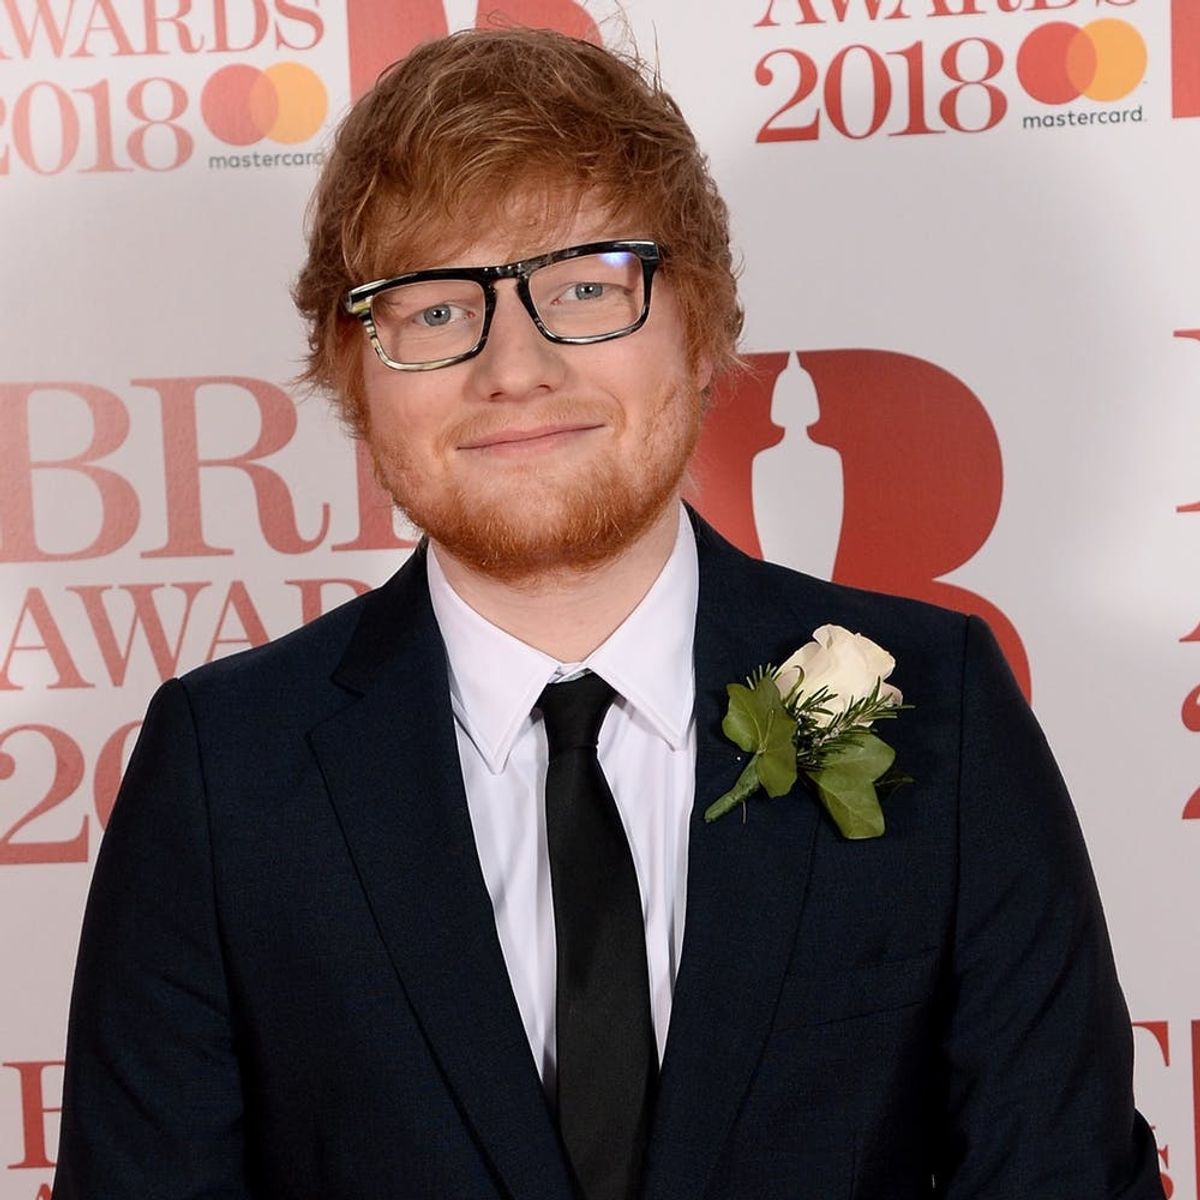 Ed Sheeran Responds to Rumors That He Secretly Married Cherry Seaborn